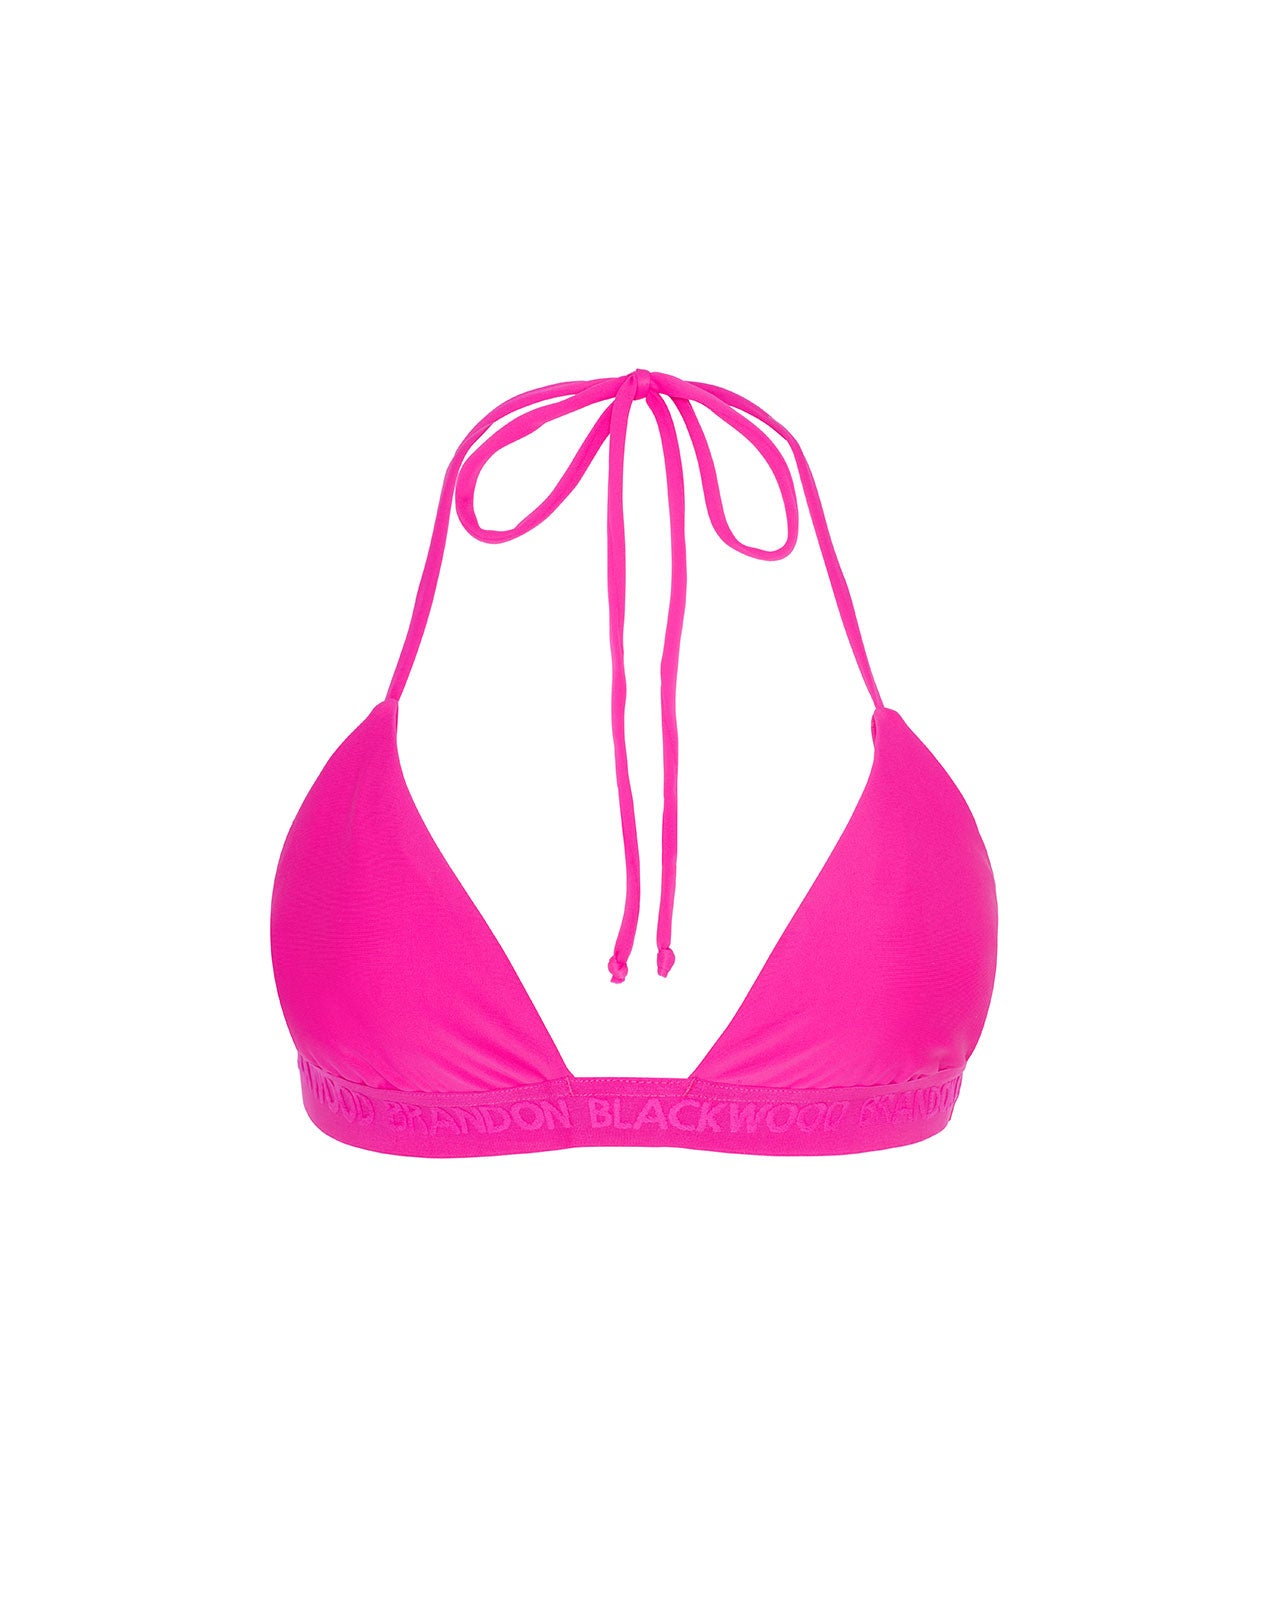 Brandon Blackwood New York - Logo Halter Bikini Top - Hot Pink